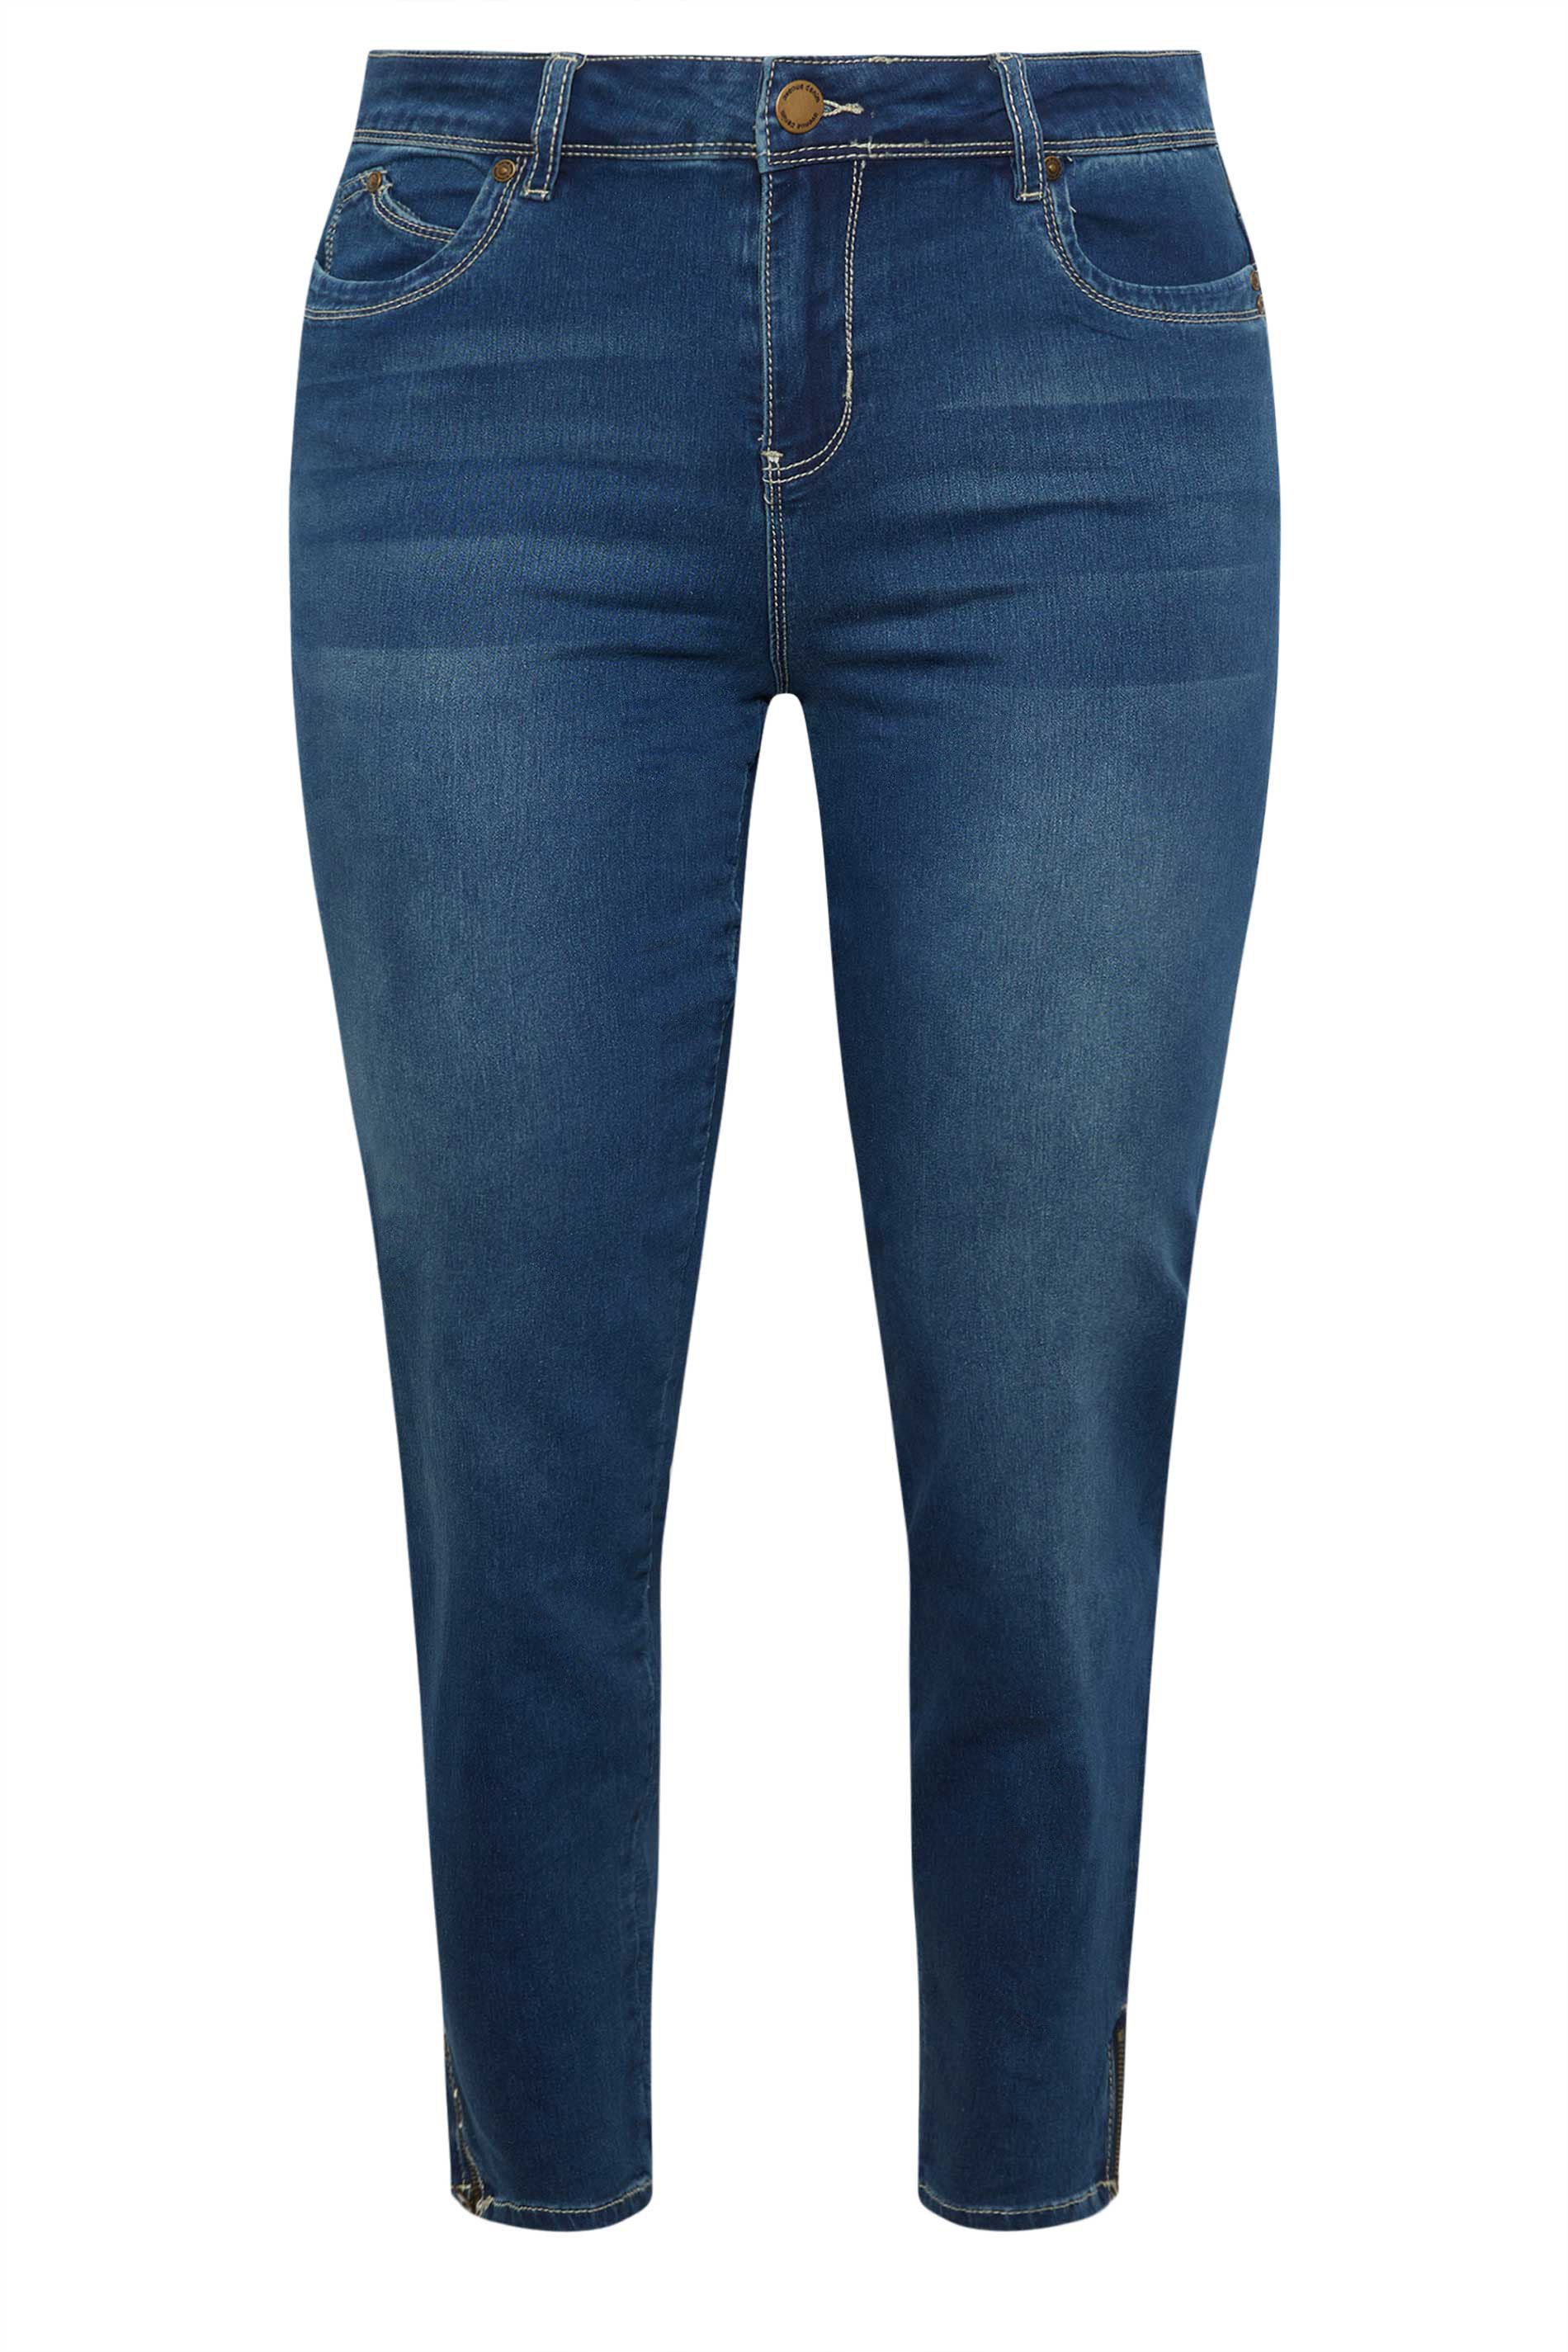 Evans Blue Denim Skinny Jeans 1